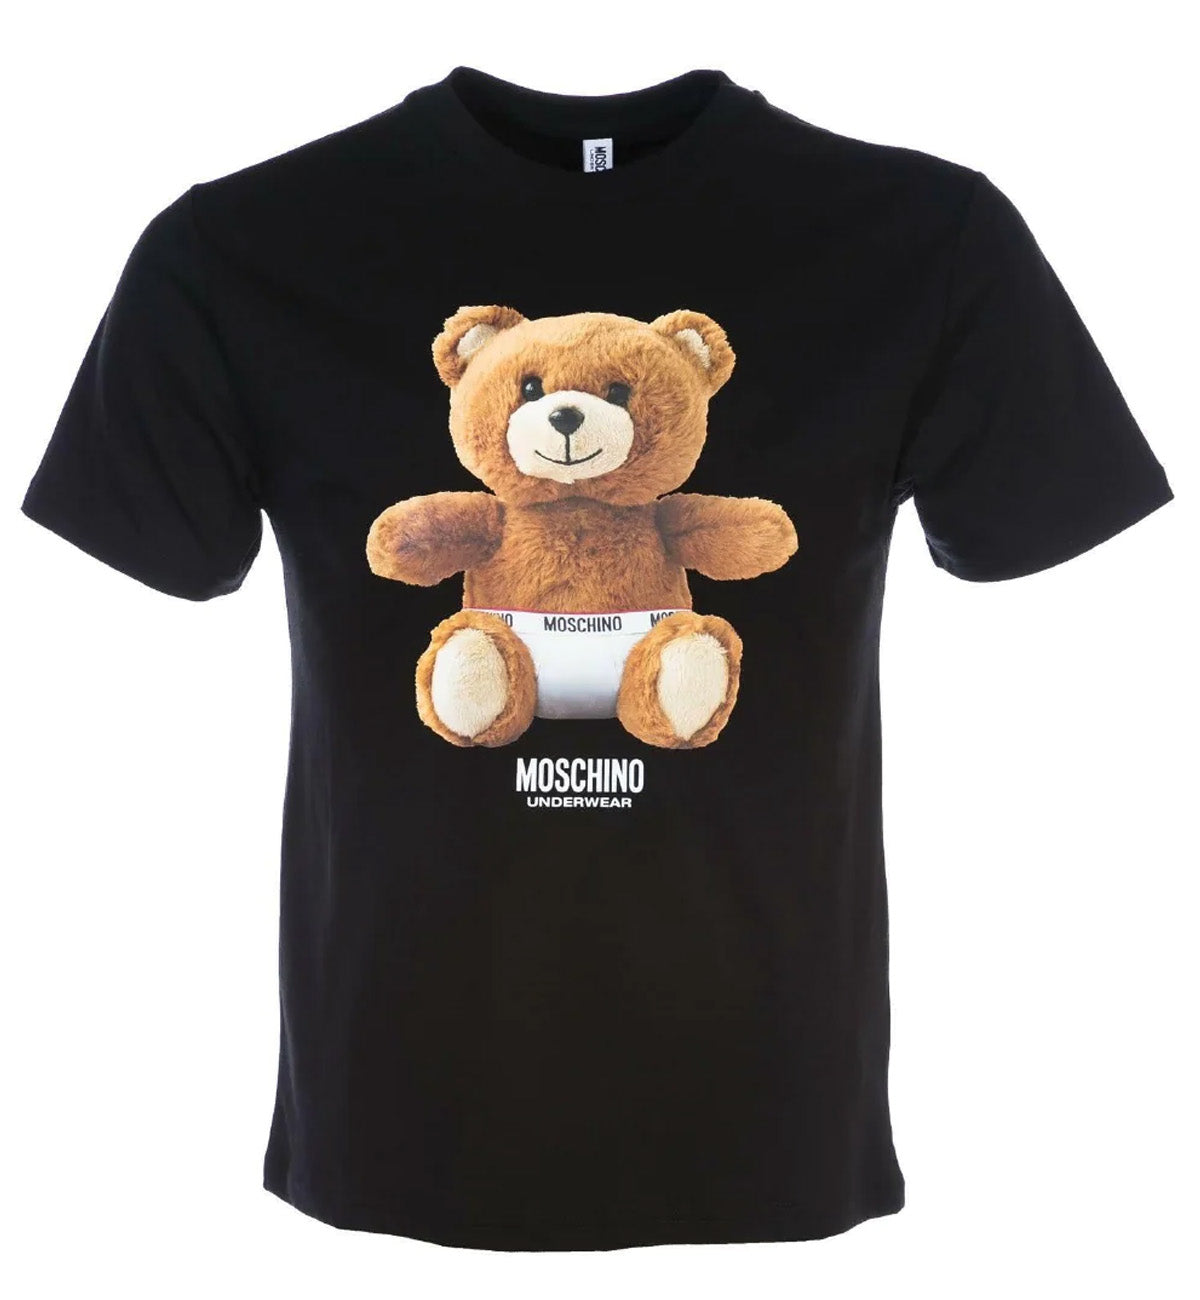 Moschino Underwear Bear T-Shirt (Black)